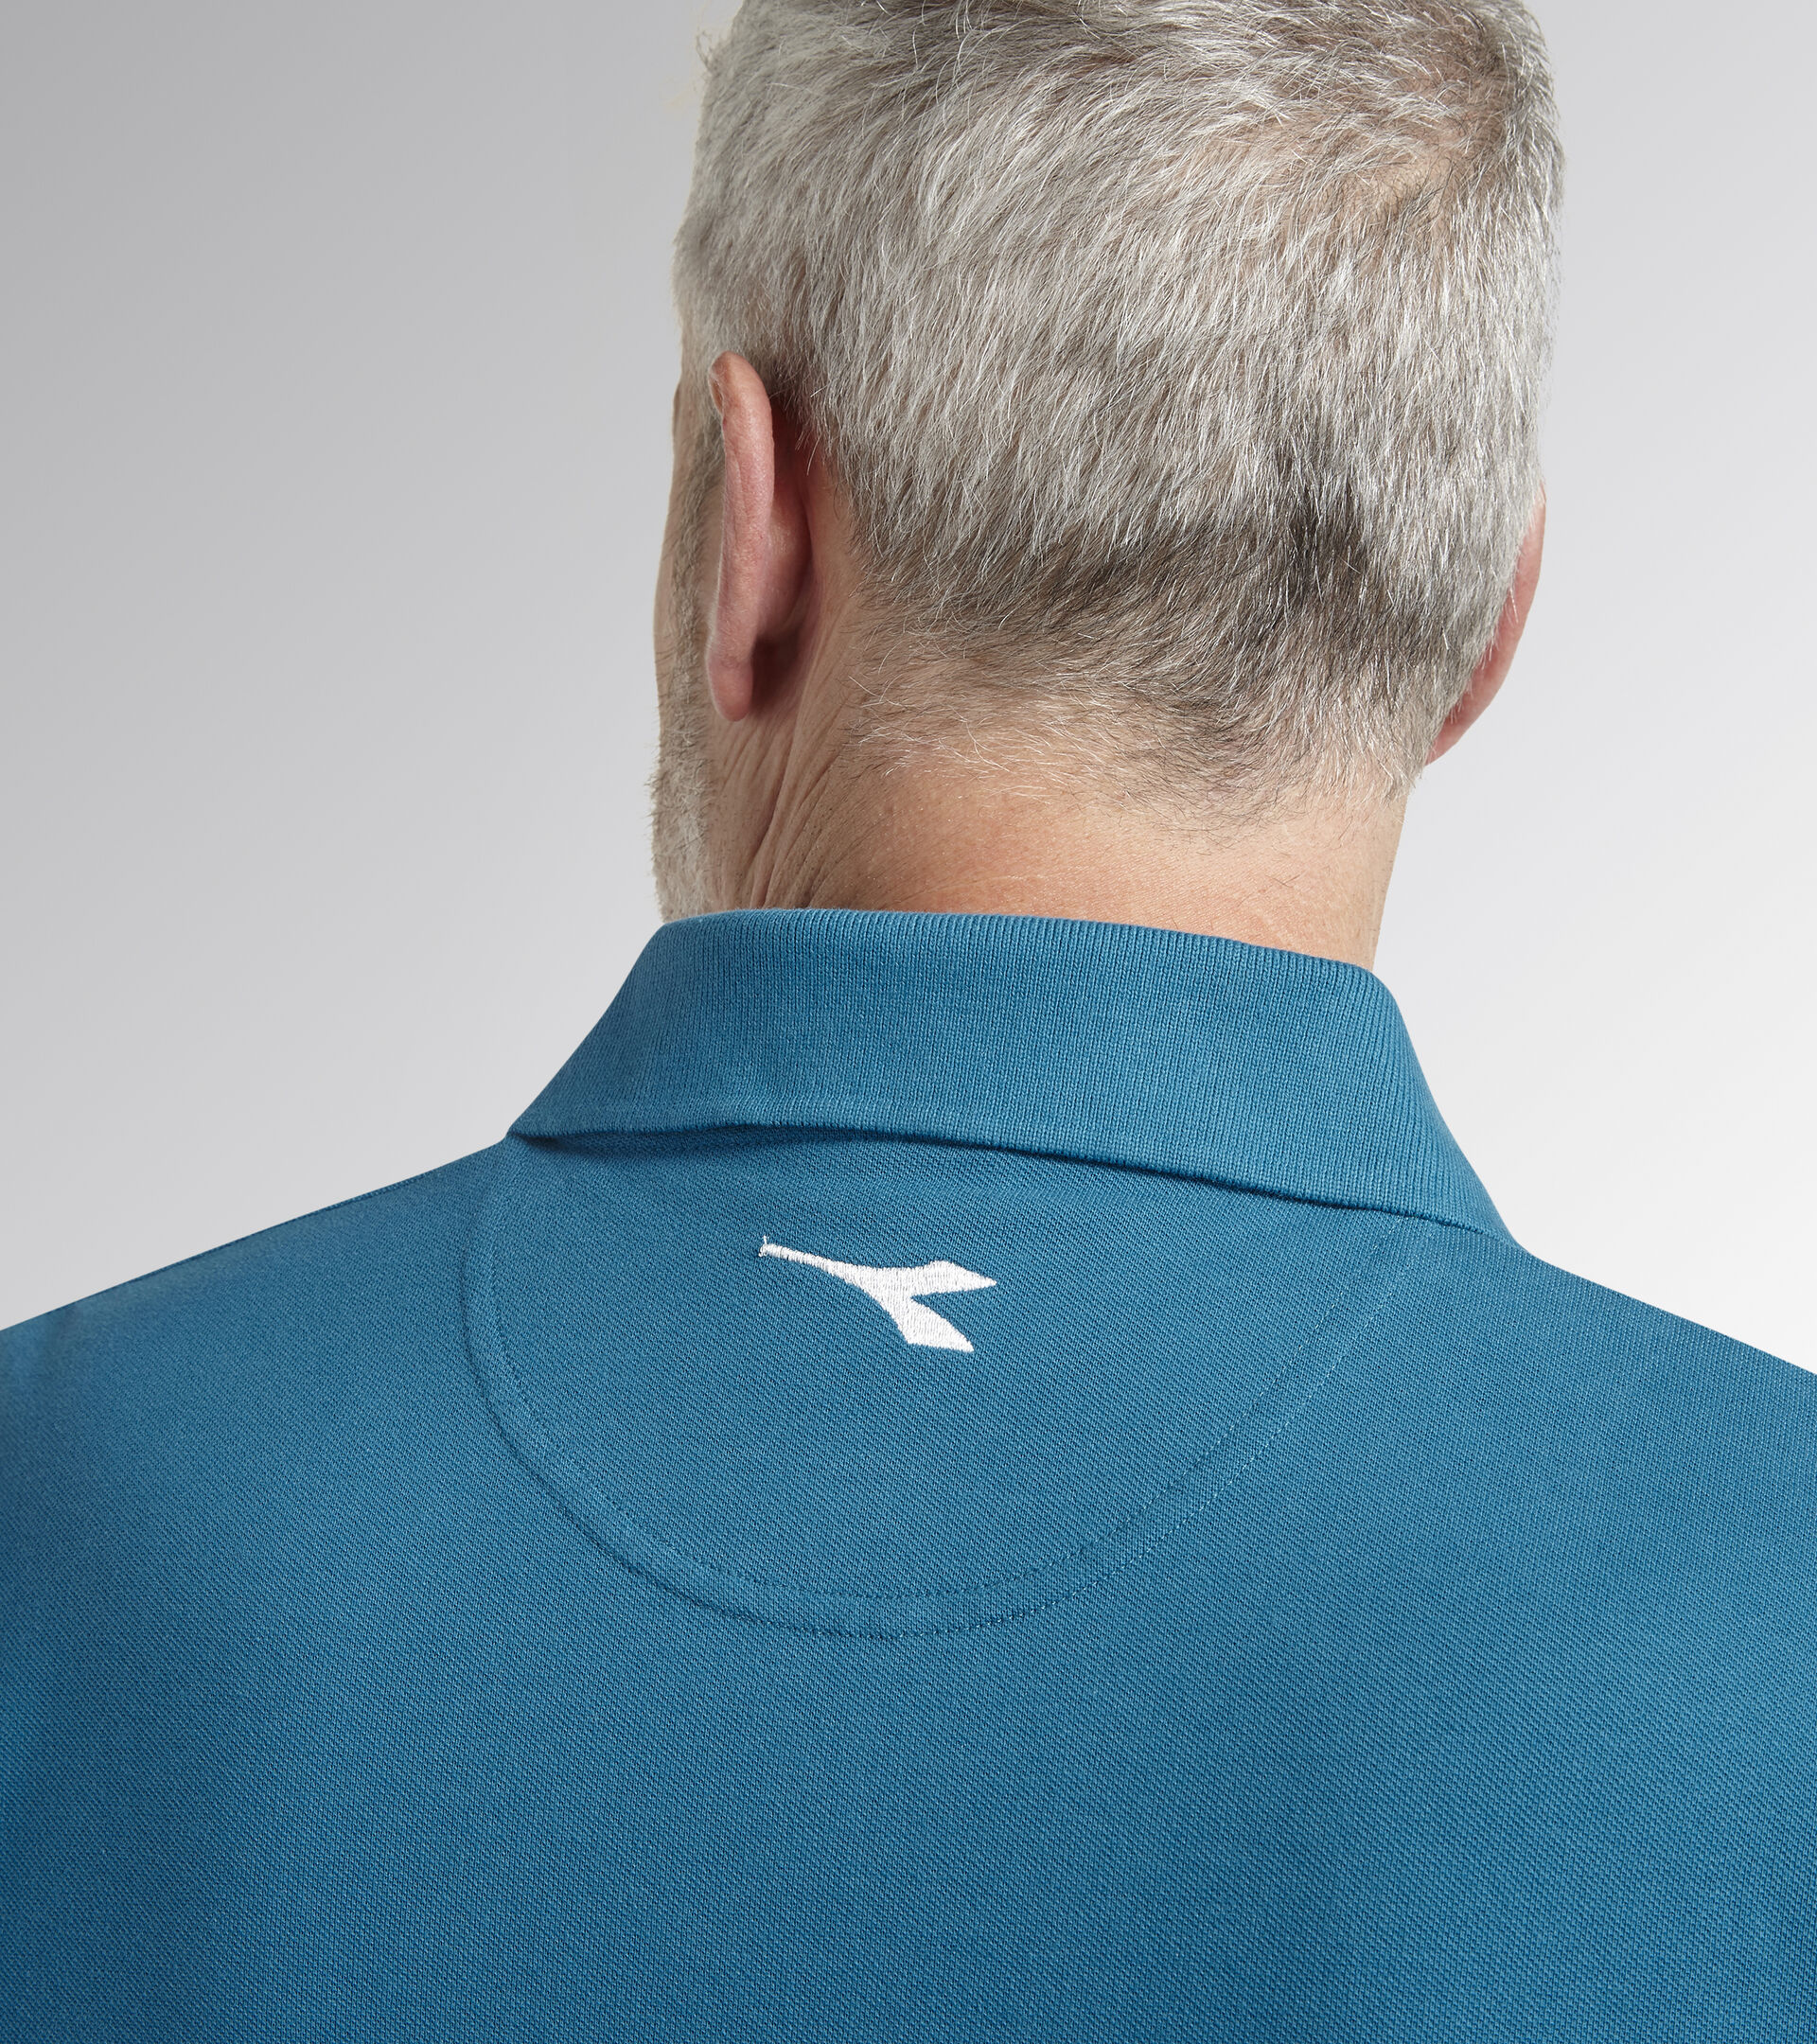 Short-sleeved work polo shirt POLO MC ATLAR ORGANIC CELESTIAL BLUE - Utility